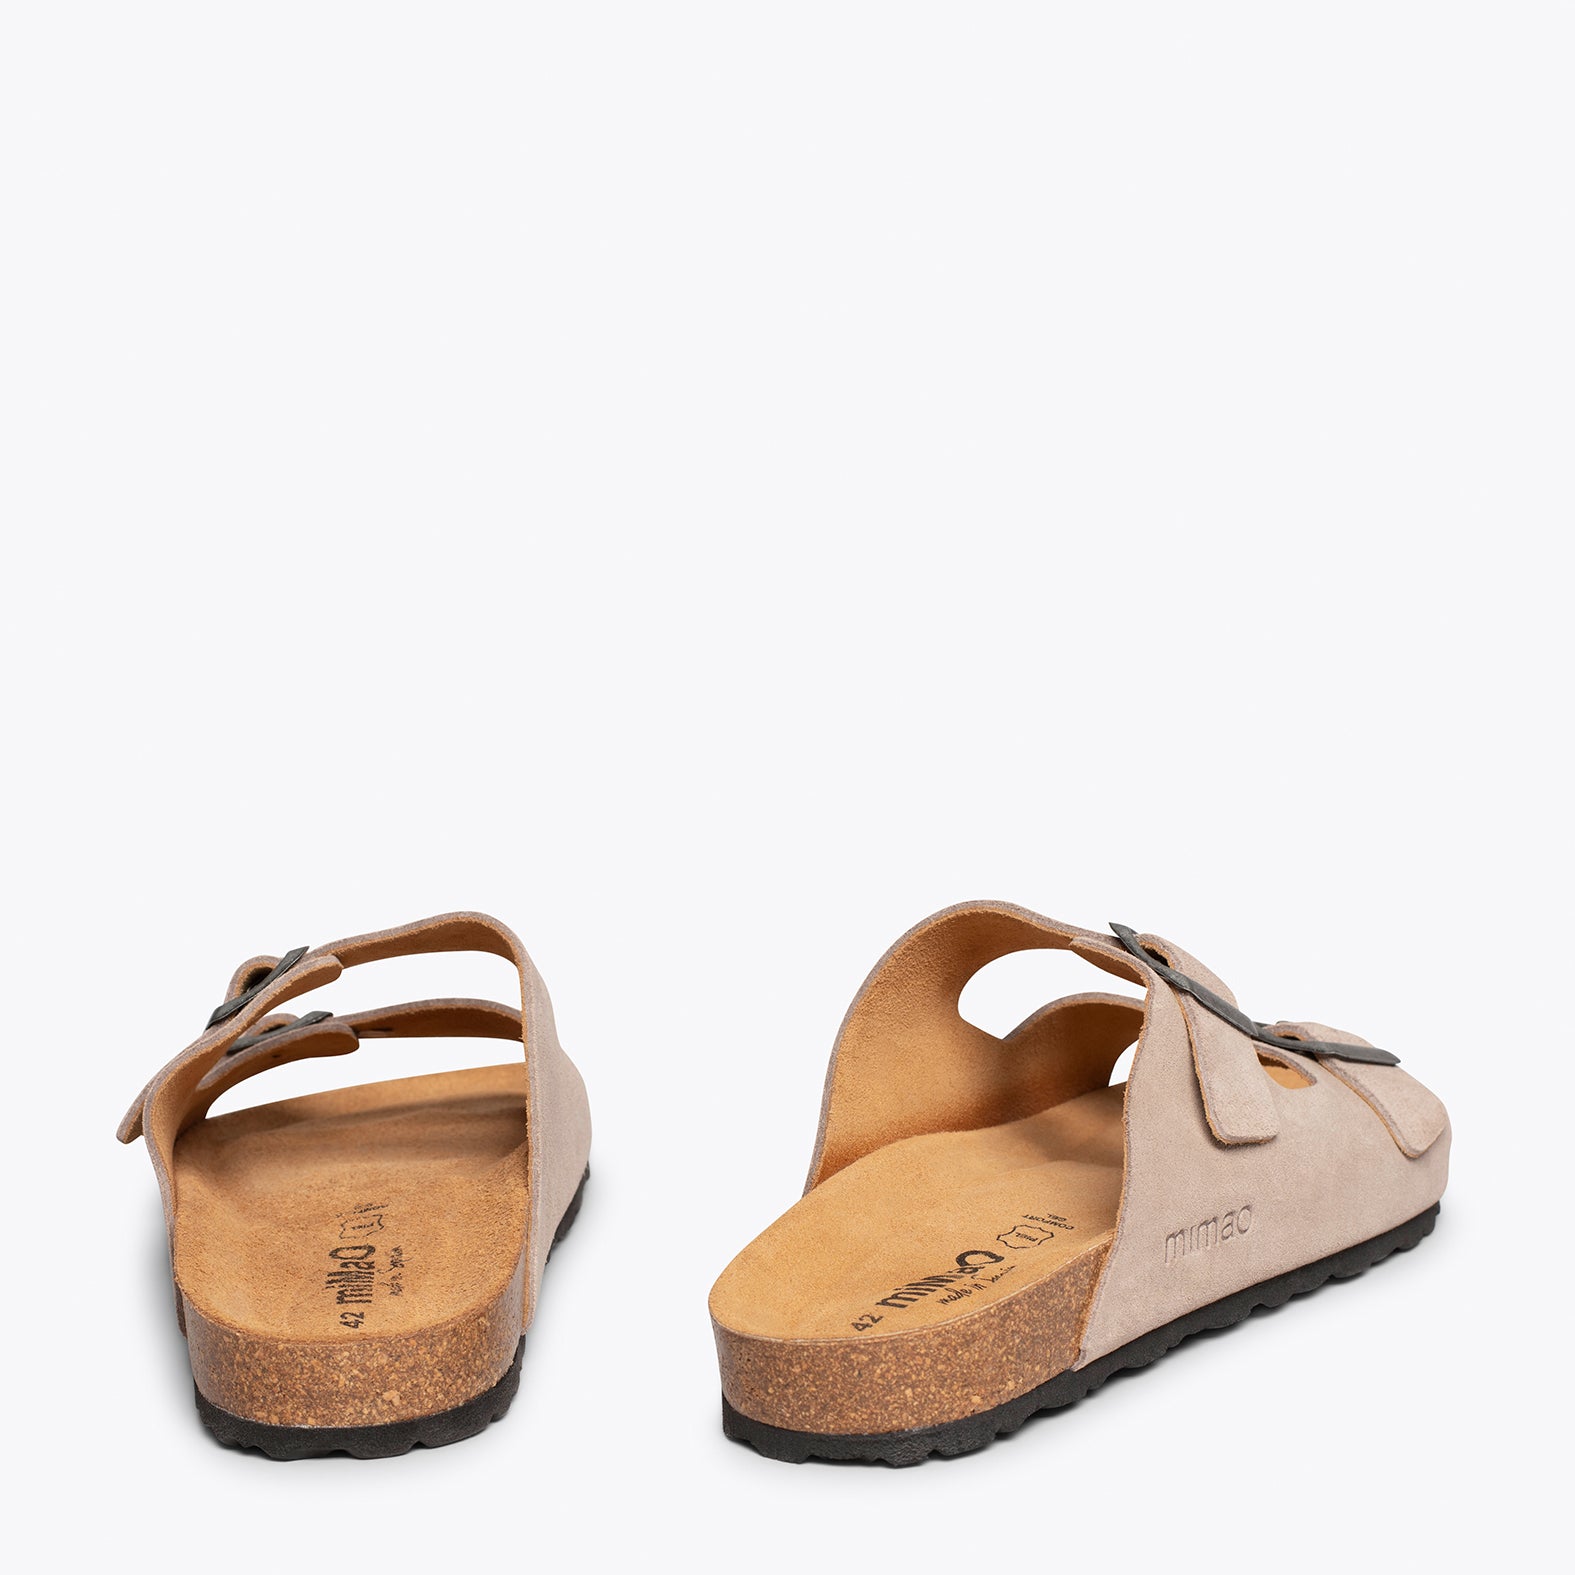 BIO – GREY sandal with bio confort for men